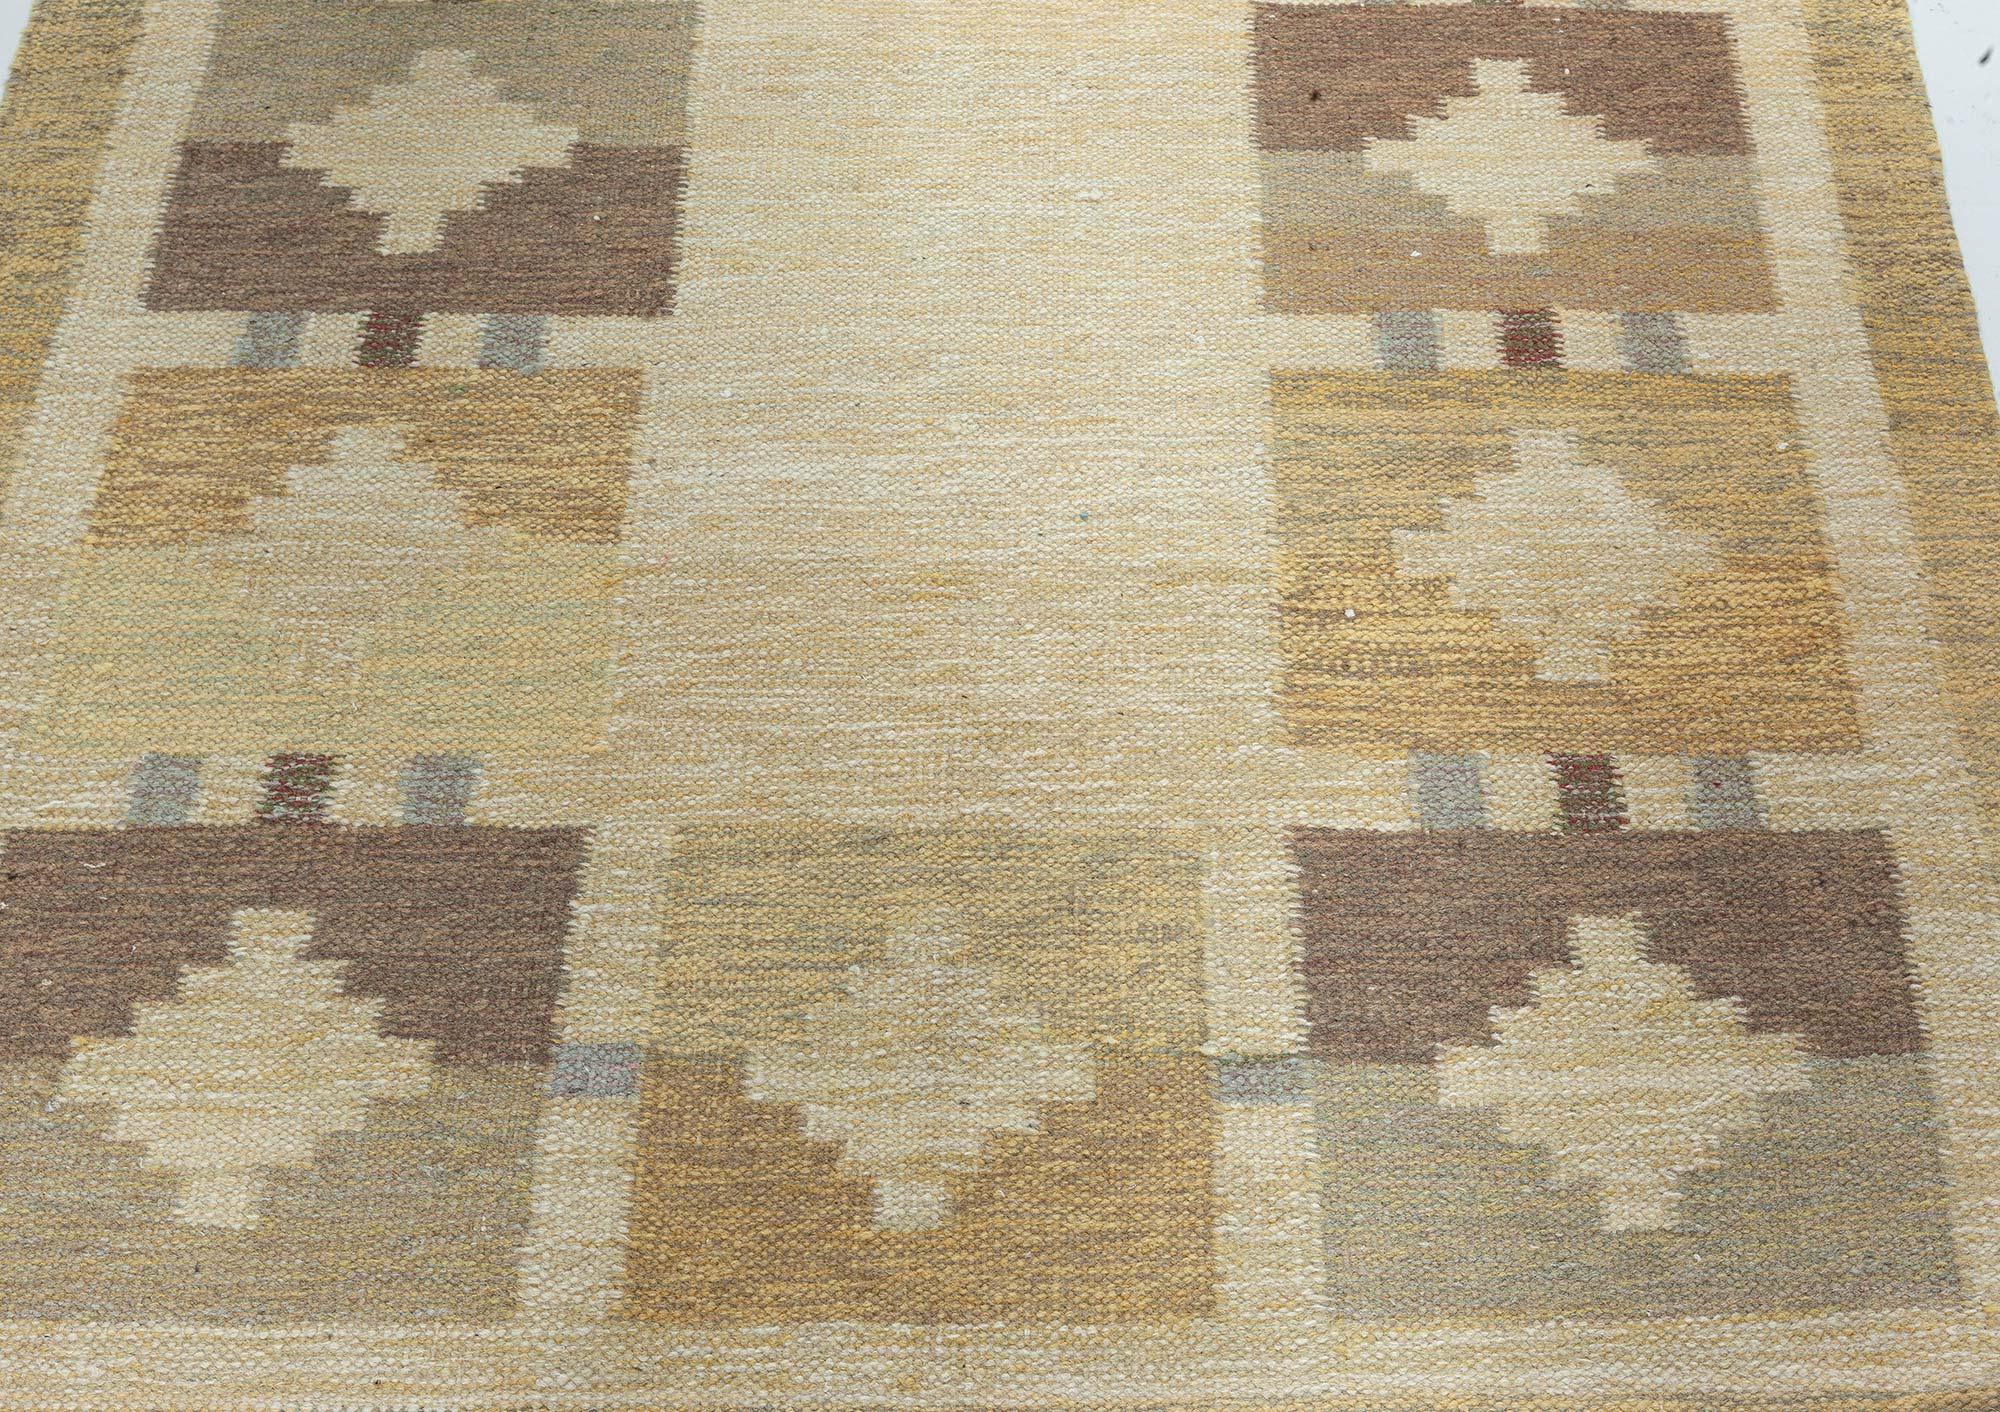 Mid-20th Century Swedish flat woven rug
Size: 5'3